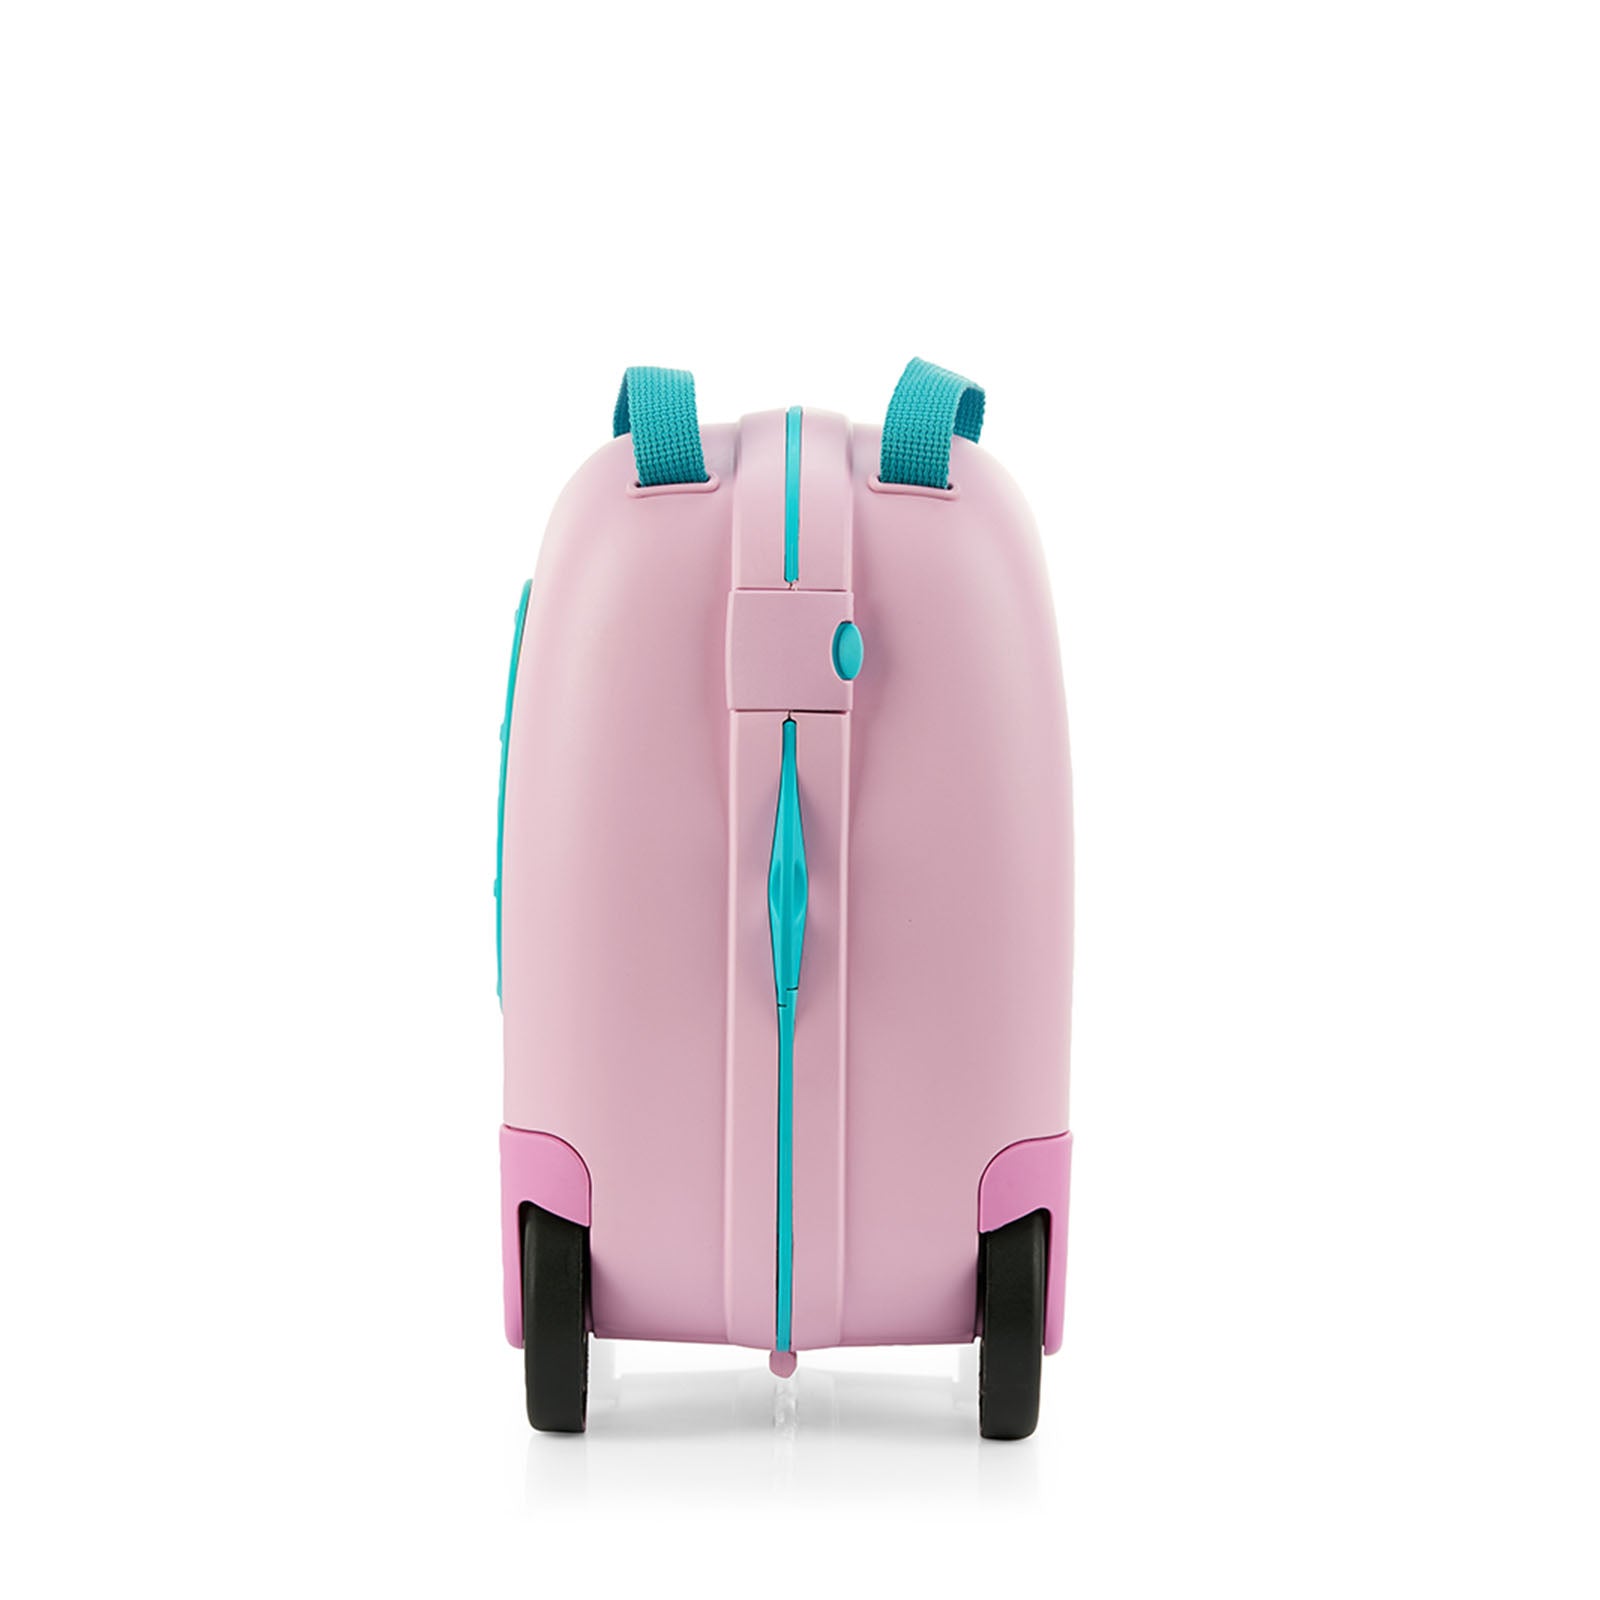 American Tourister Skittle NXT 50cm Ride-On Suitcase Light Pink Unicorn